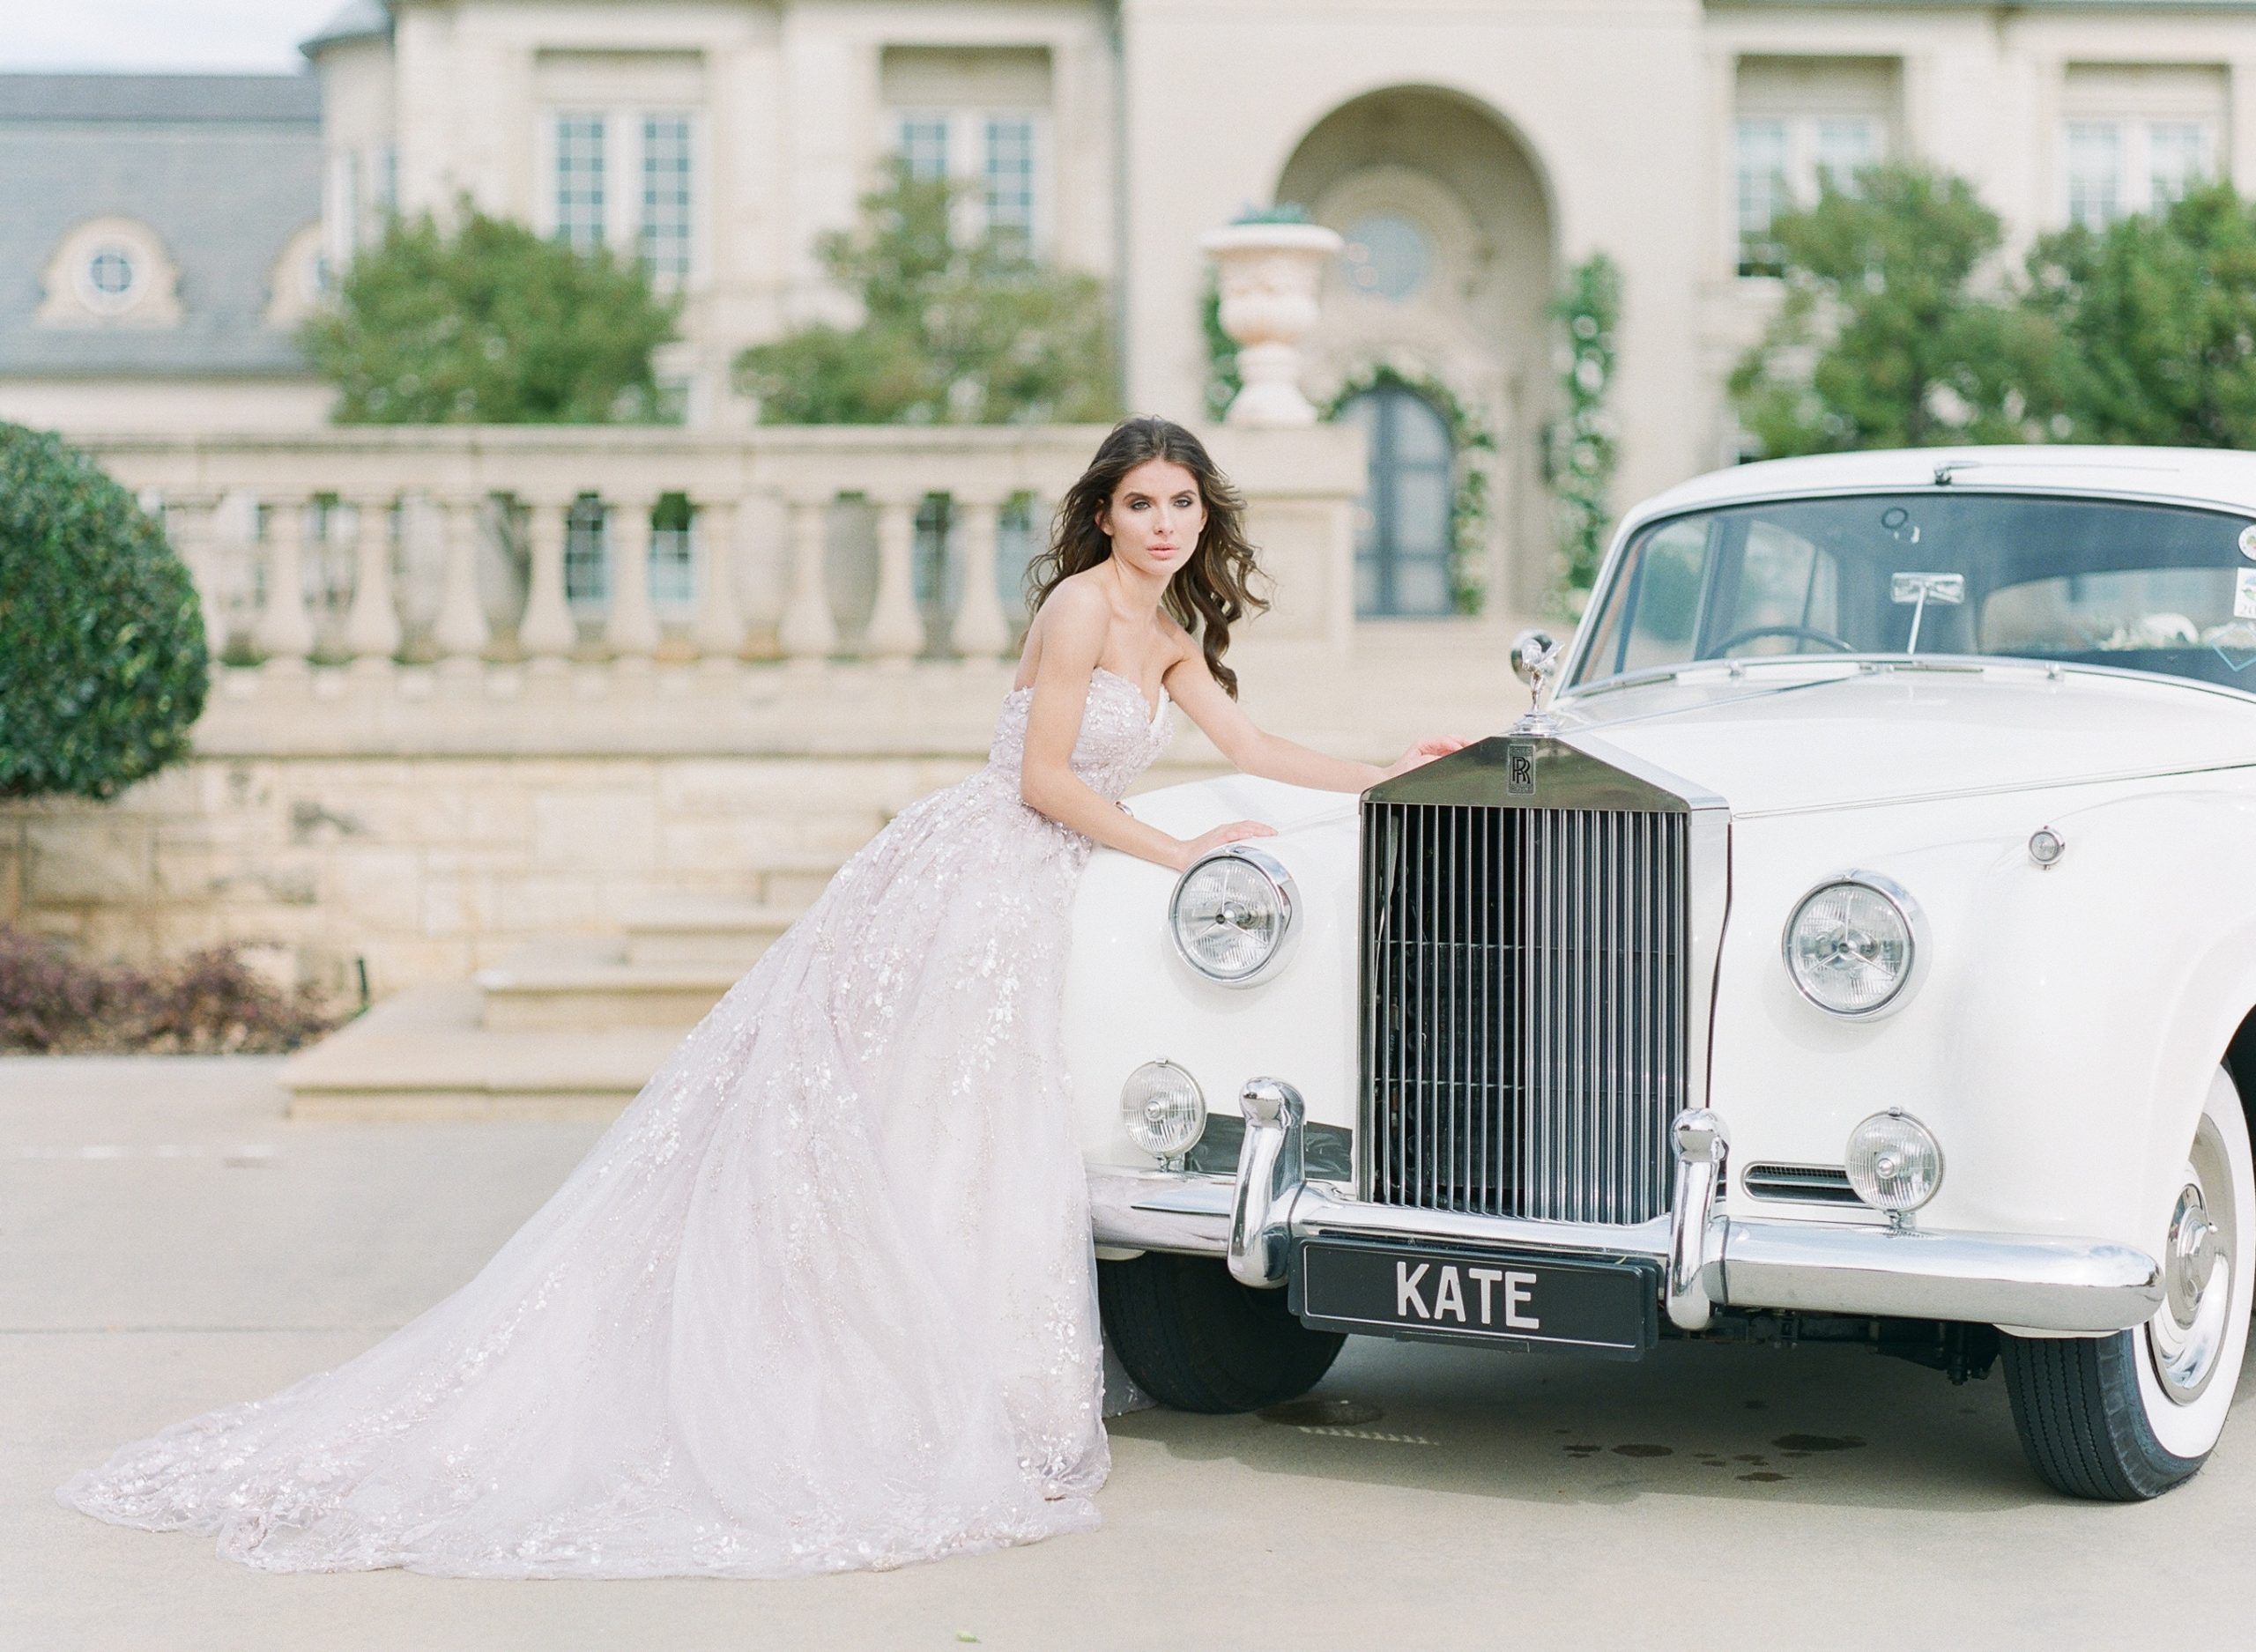 Bride Leaning on Vintage Car in Lavender Couture Wedding Dresses